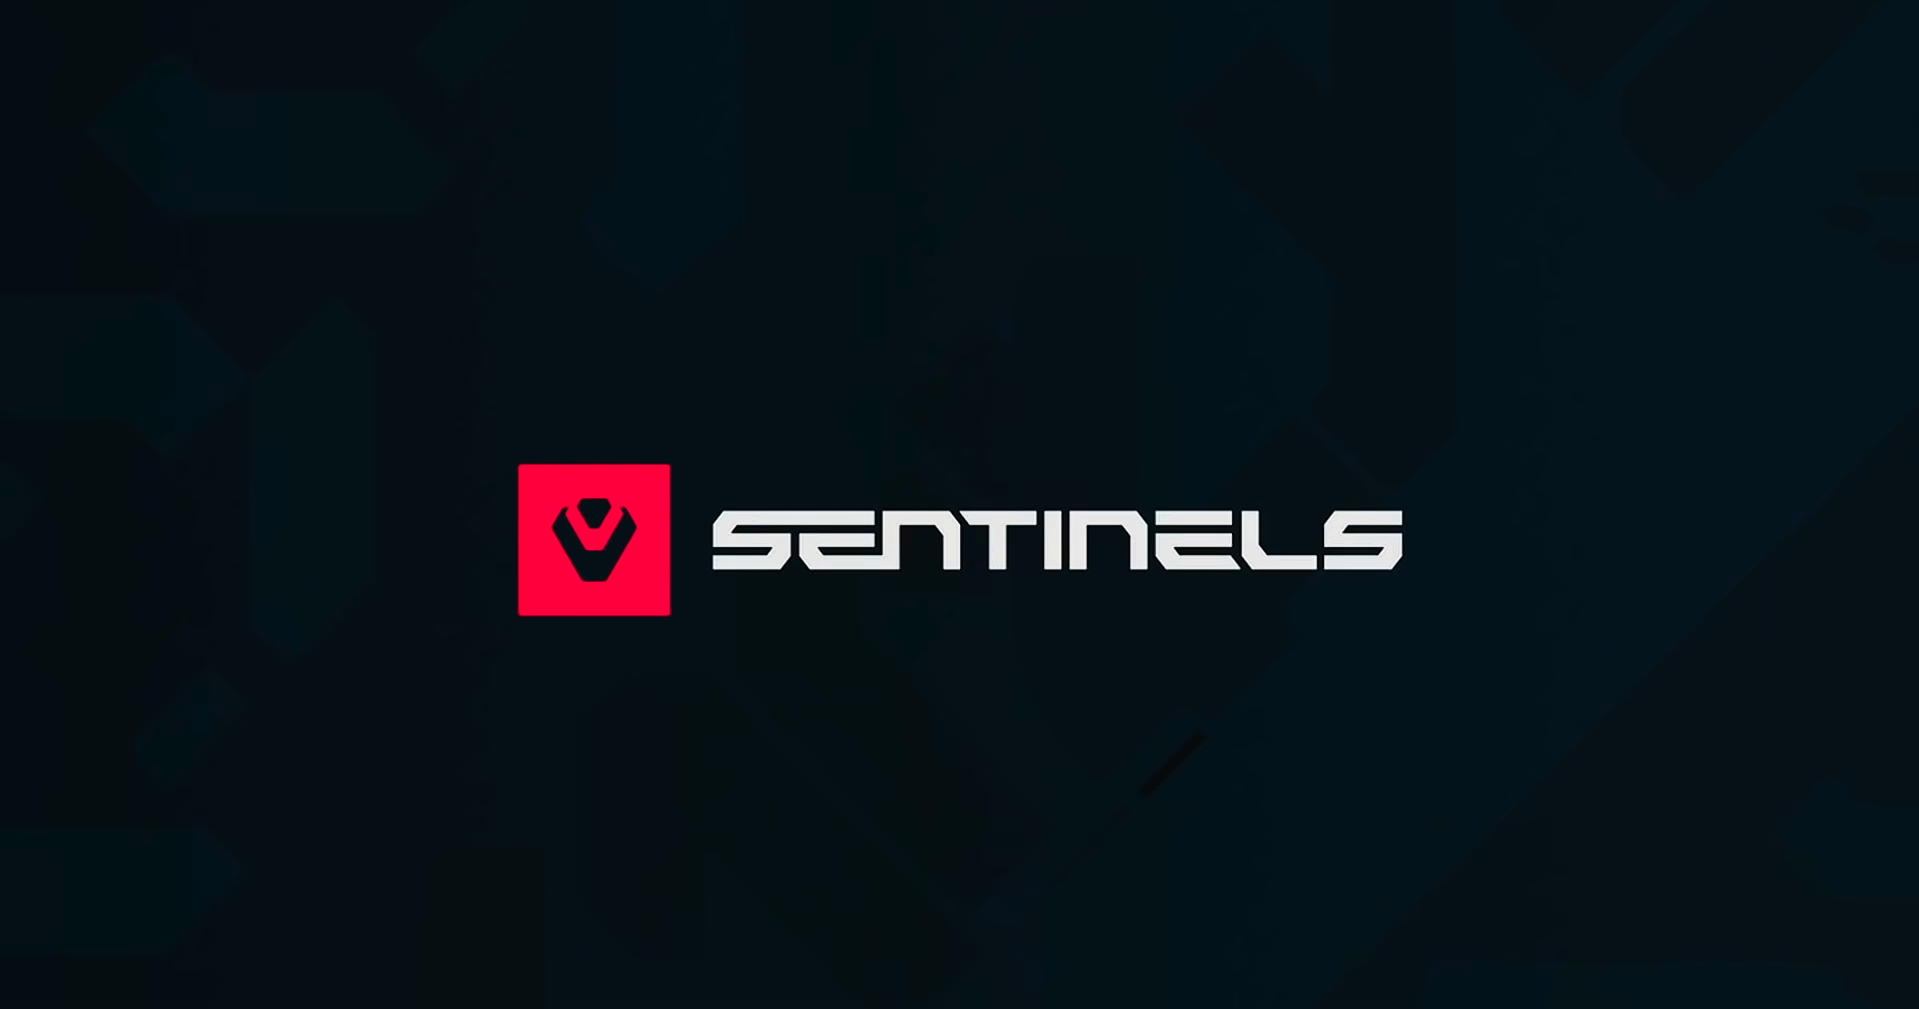 Sentinels Logo